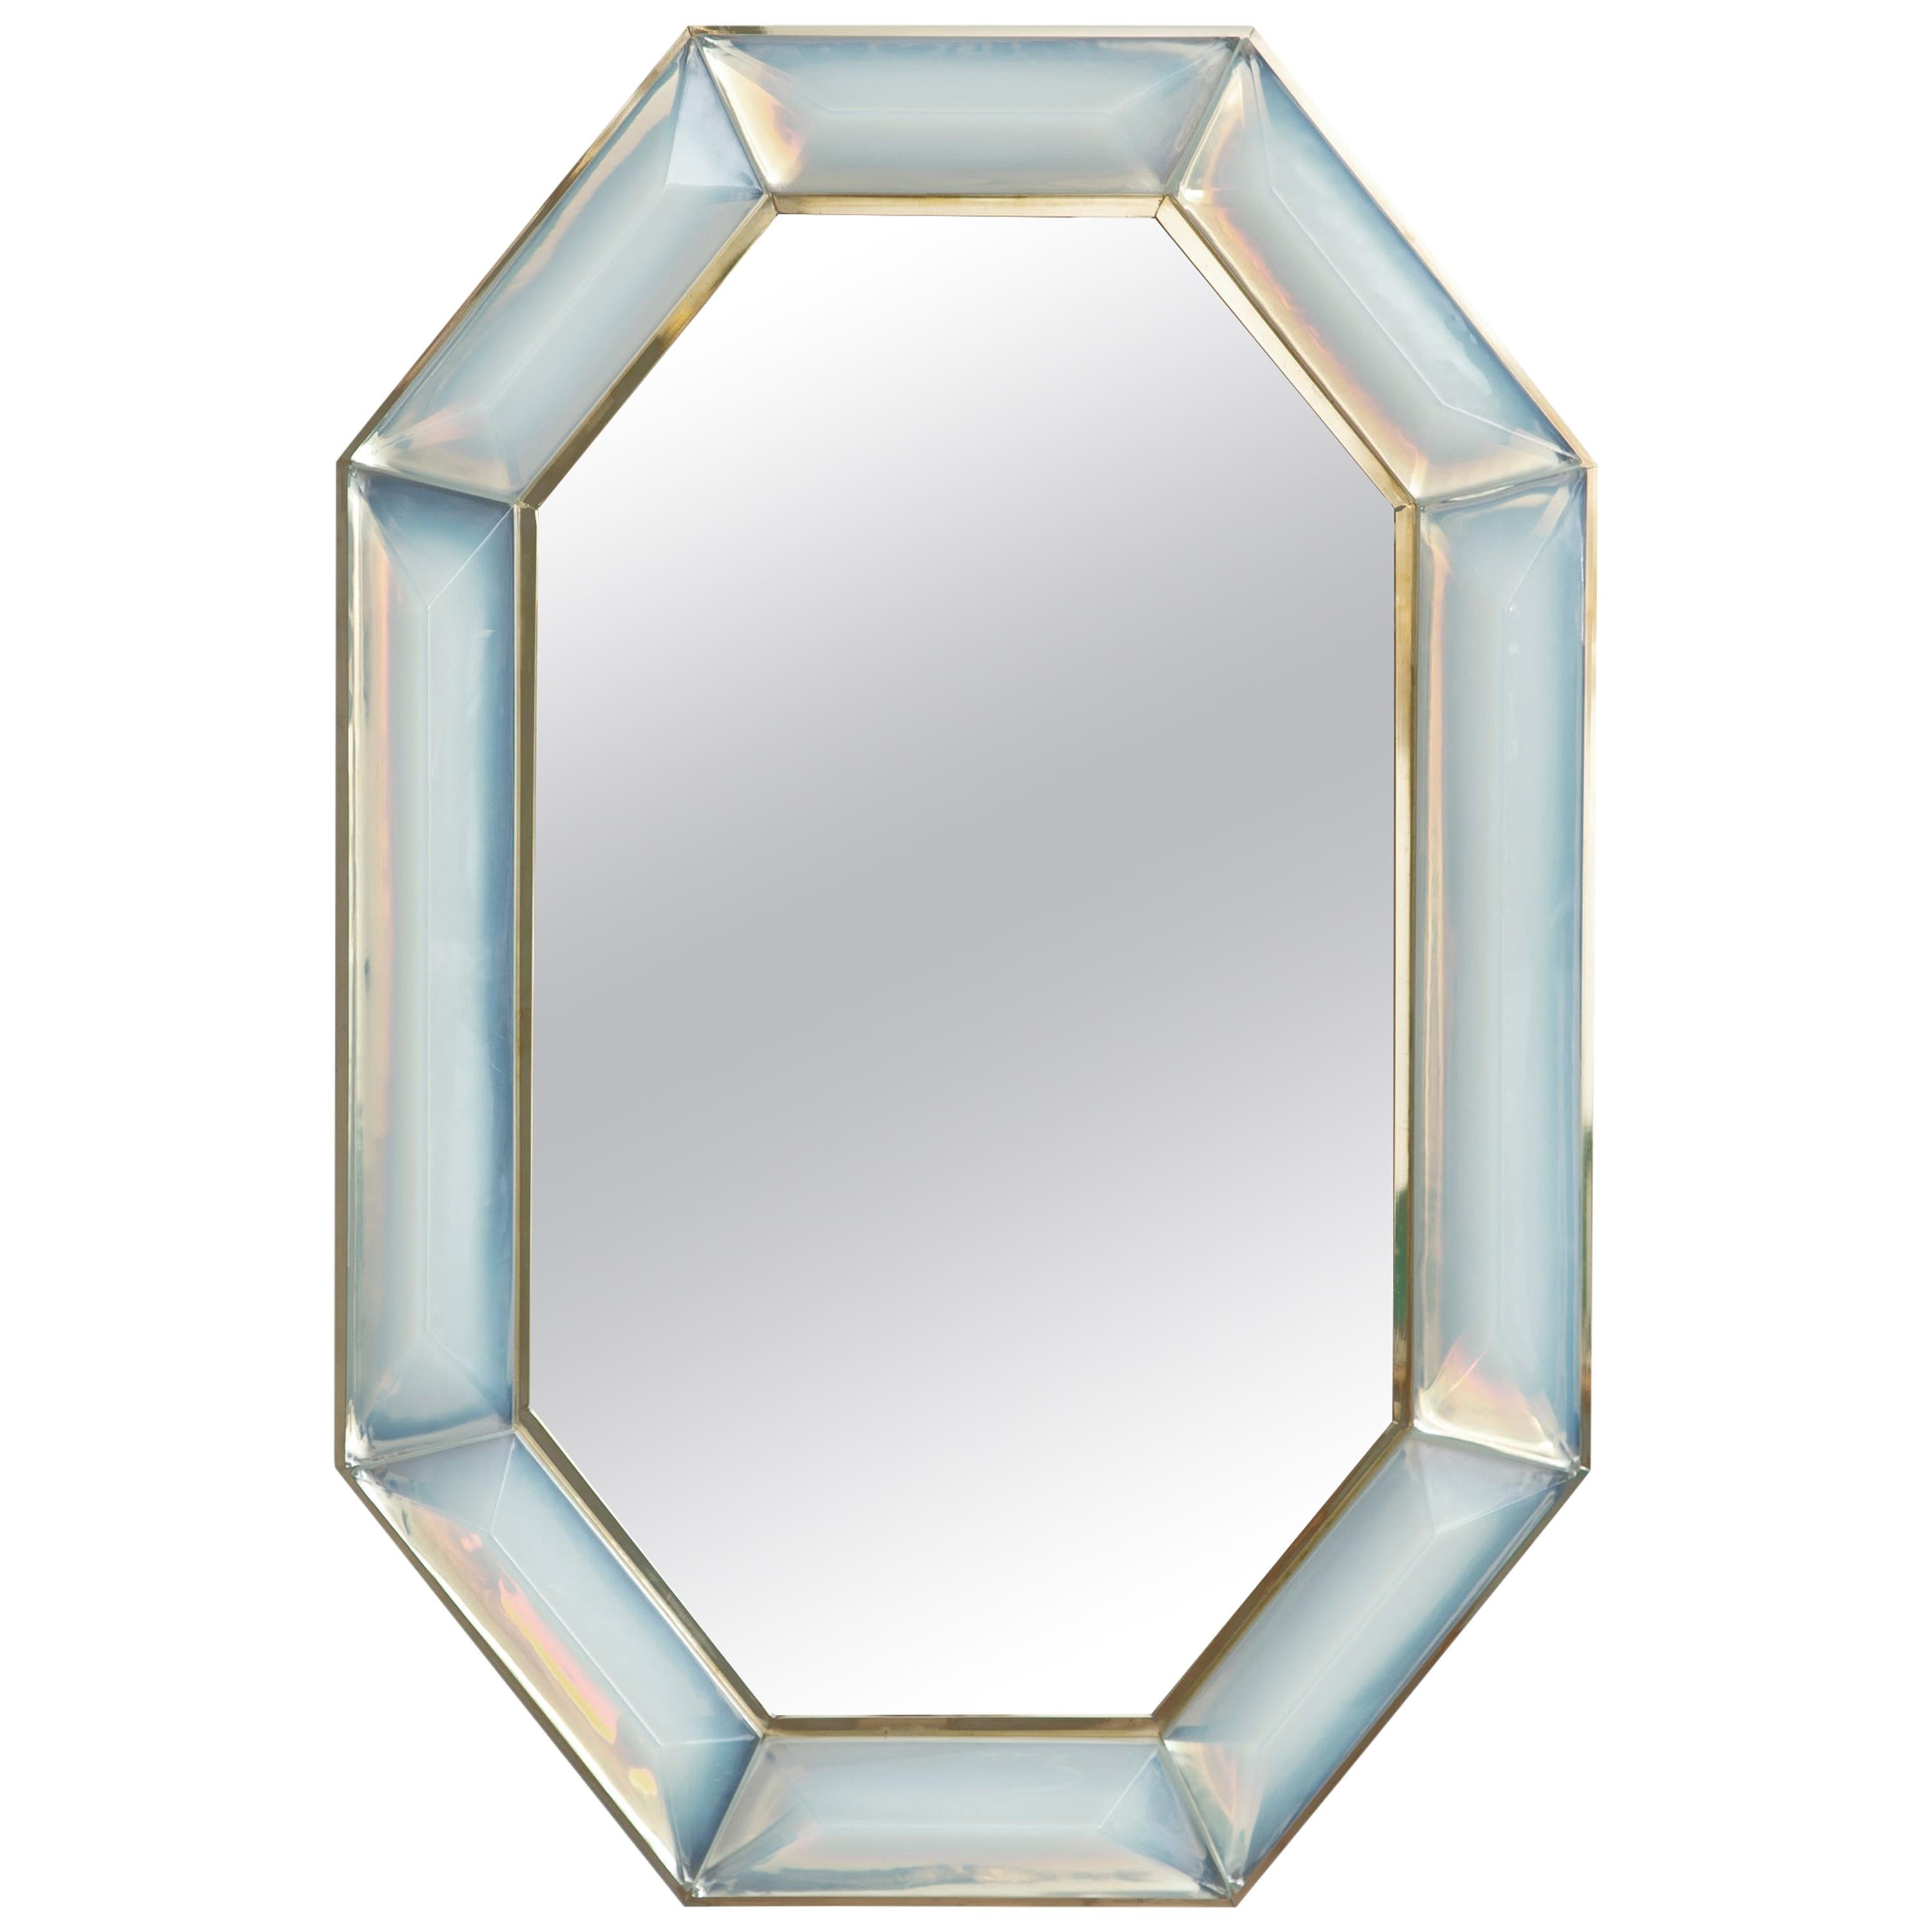 Miroir octogonal en verre de Murano opalin irisé sur mesure, en stock en vente